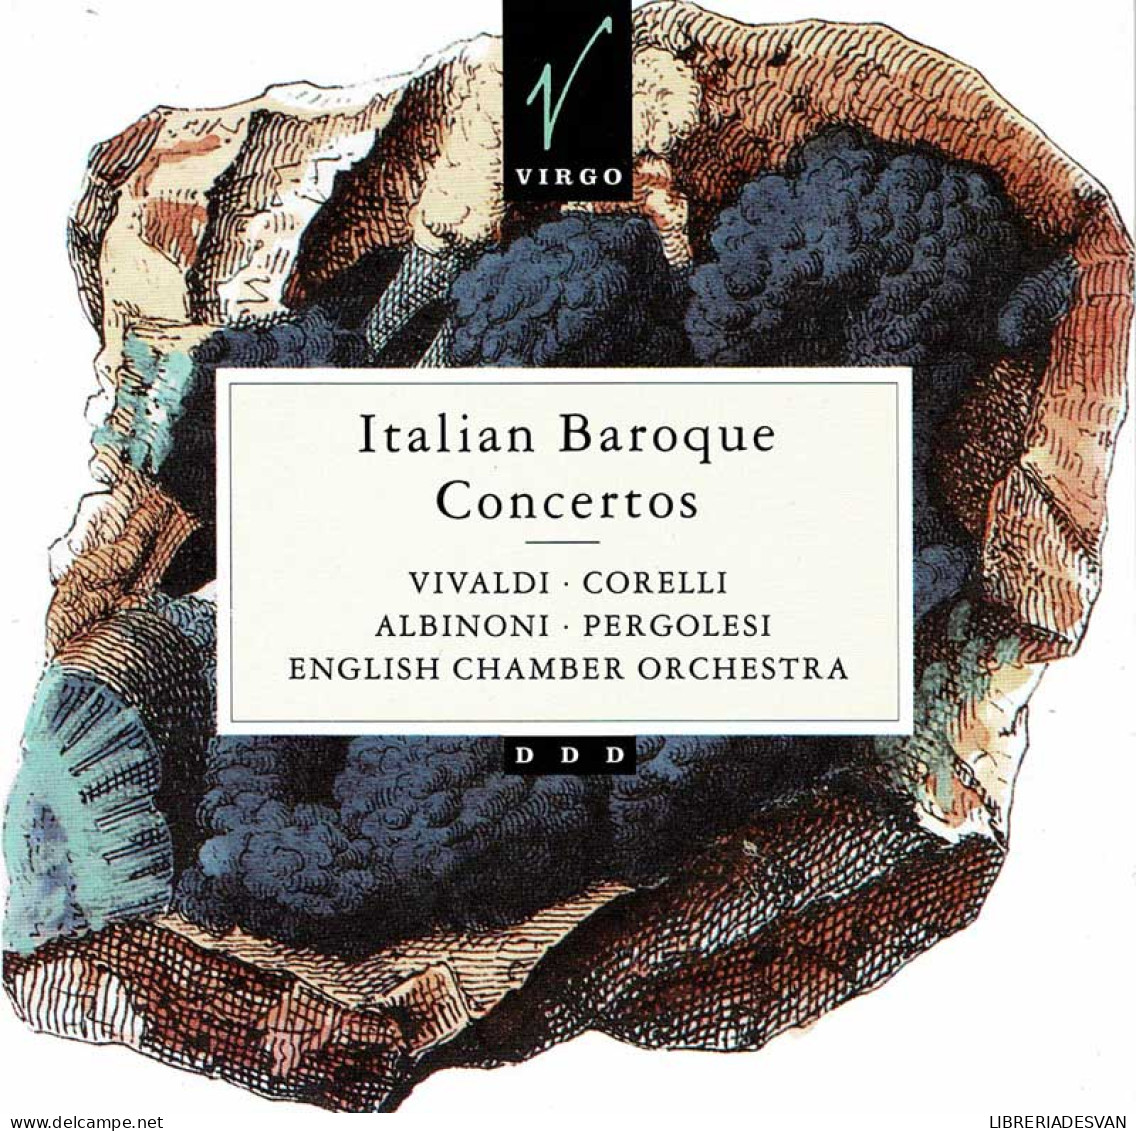 Vivaldi, Corelli, Albinoni, Pergolesi - Italian Baroque Concertos. CD - Classica